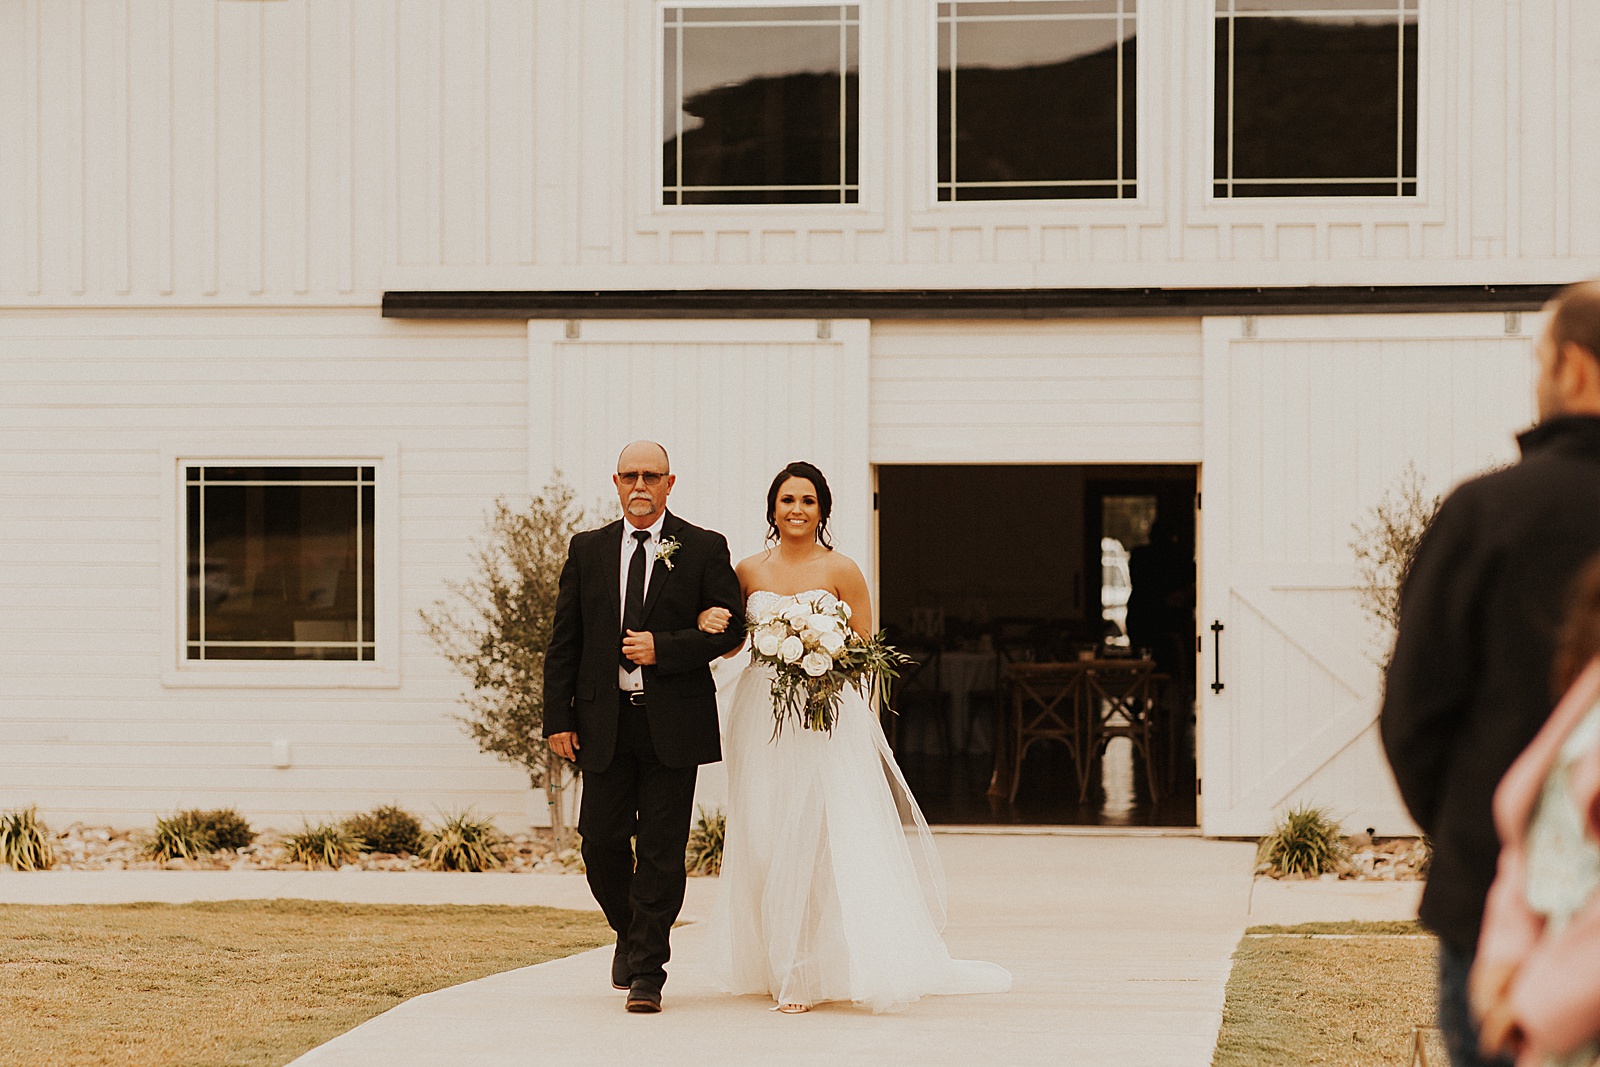 A classy fall wedding at Sabrina Cedars venue in Abilene, TX.